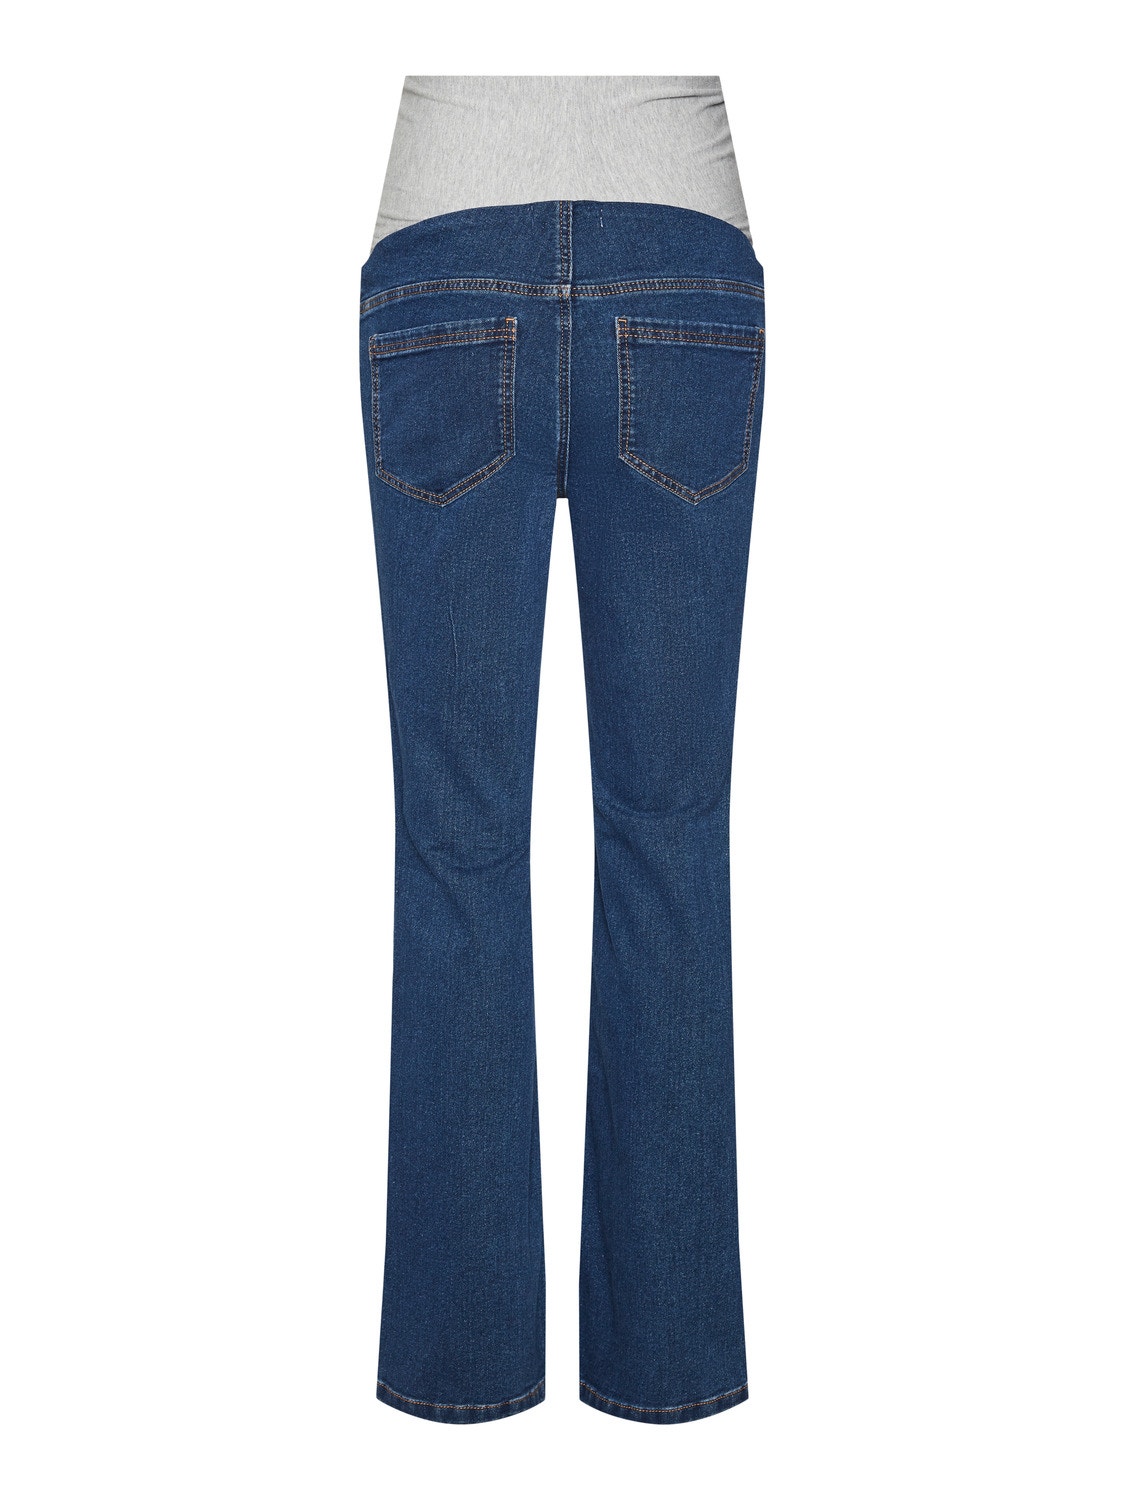 MAMA.LICIOUS Jeans Jegging Fit Vita media -Dark Blue Denim - 20020014